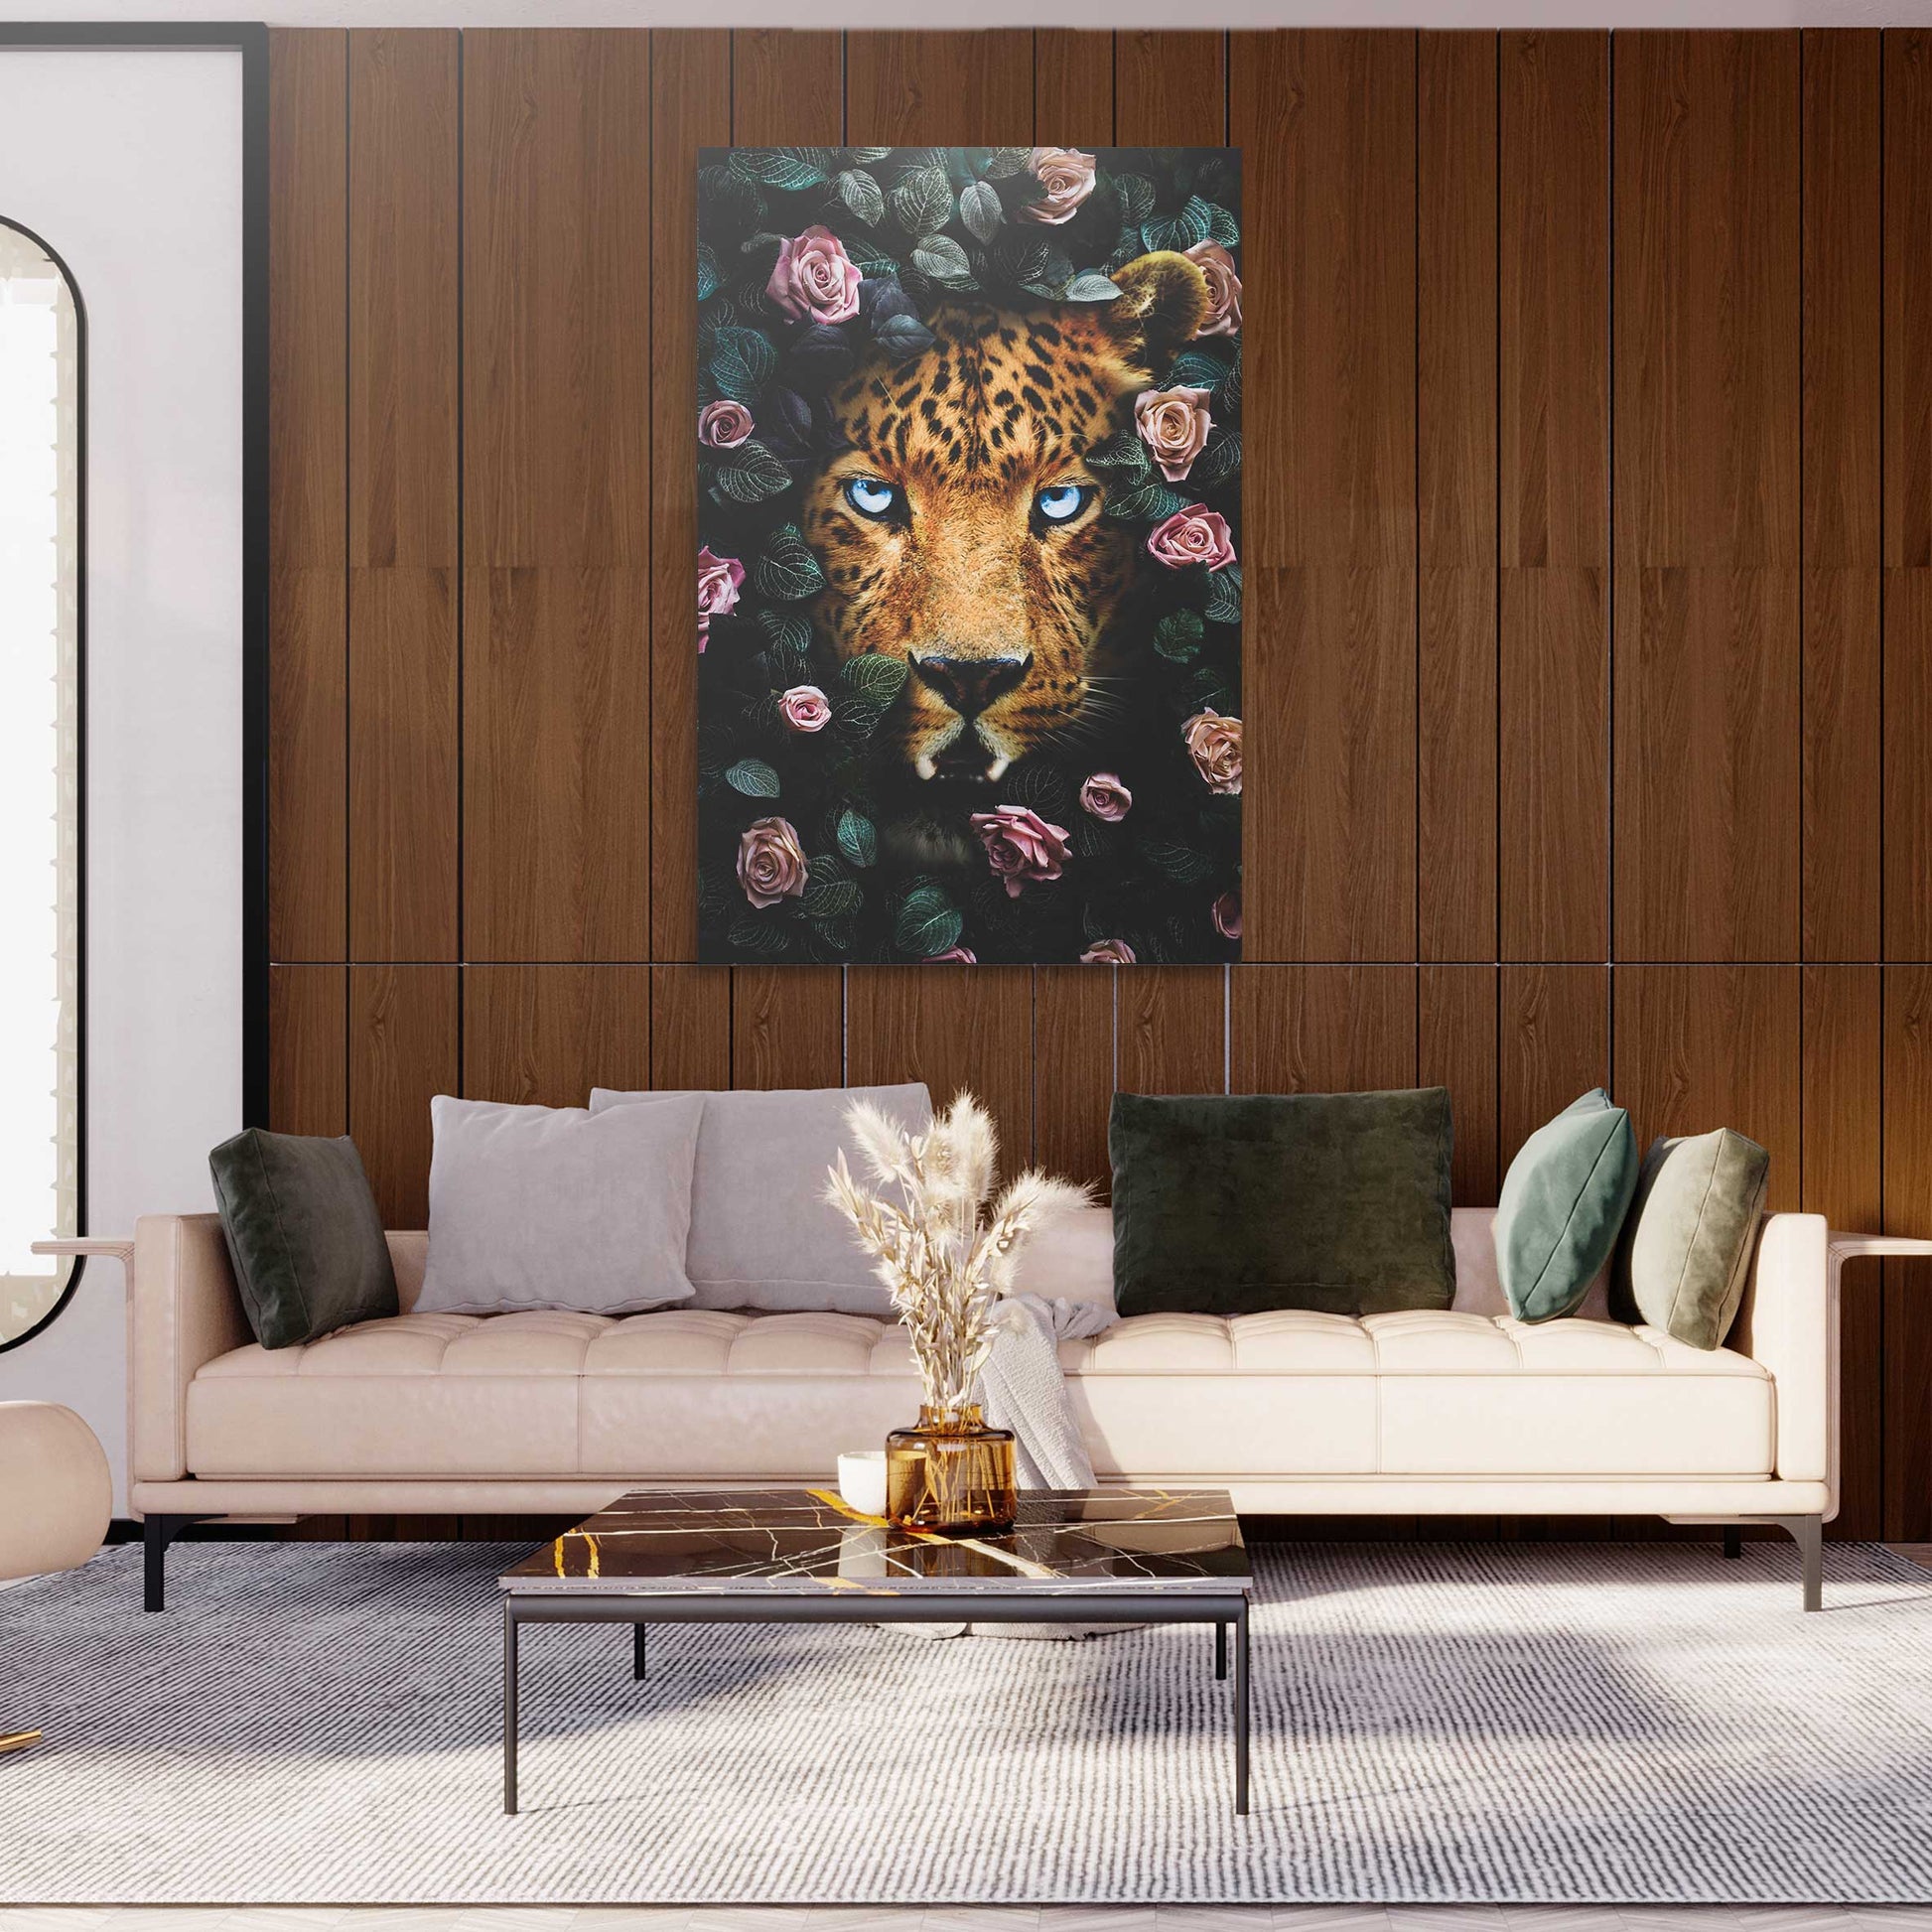 Leopard Roses Wall Art | Inspirational Wall Art Motivational Wall Art Quotes Office Art | ImpaktMaker Exclusive Canvas Art Portrait